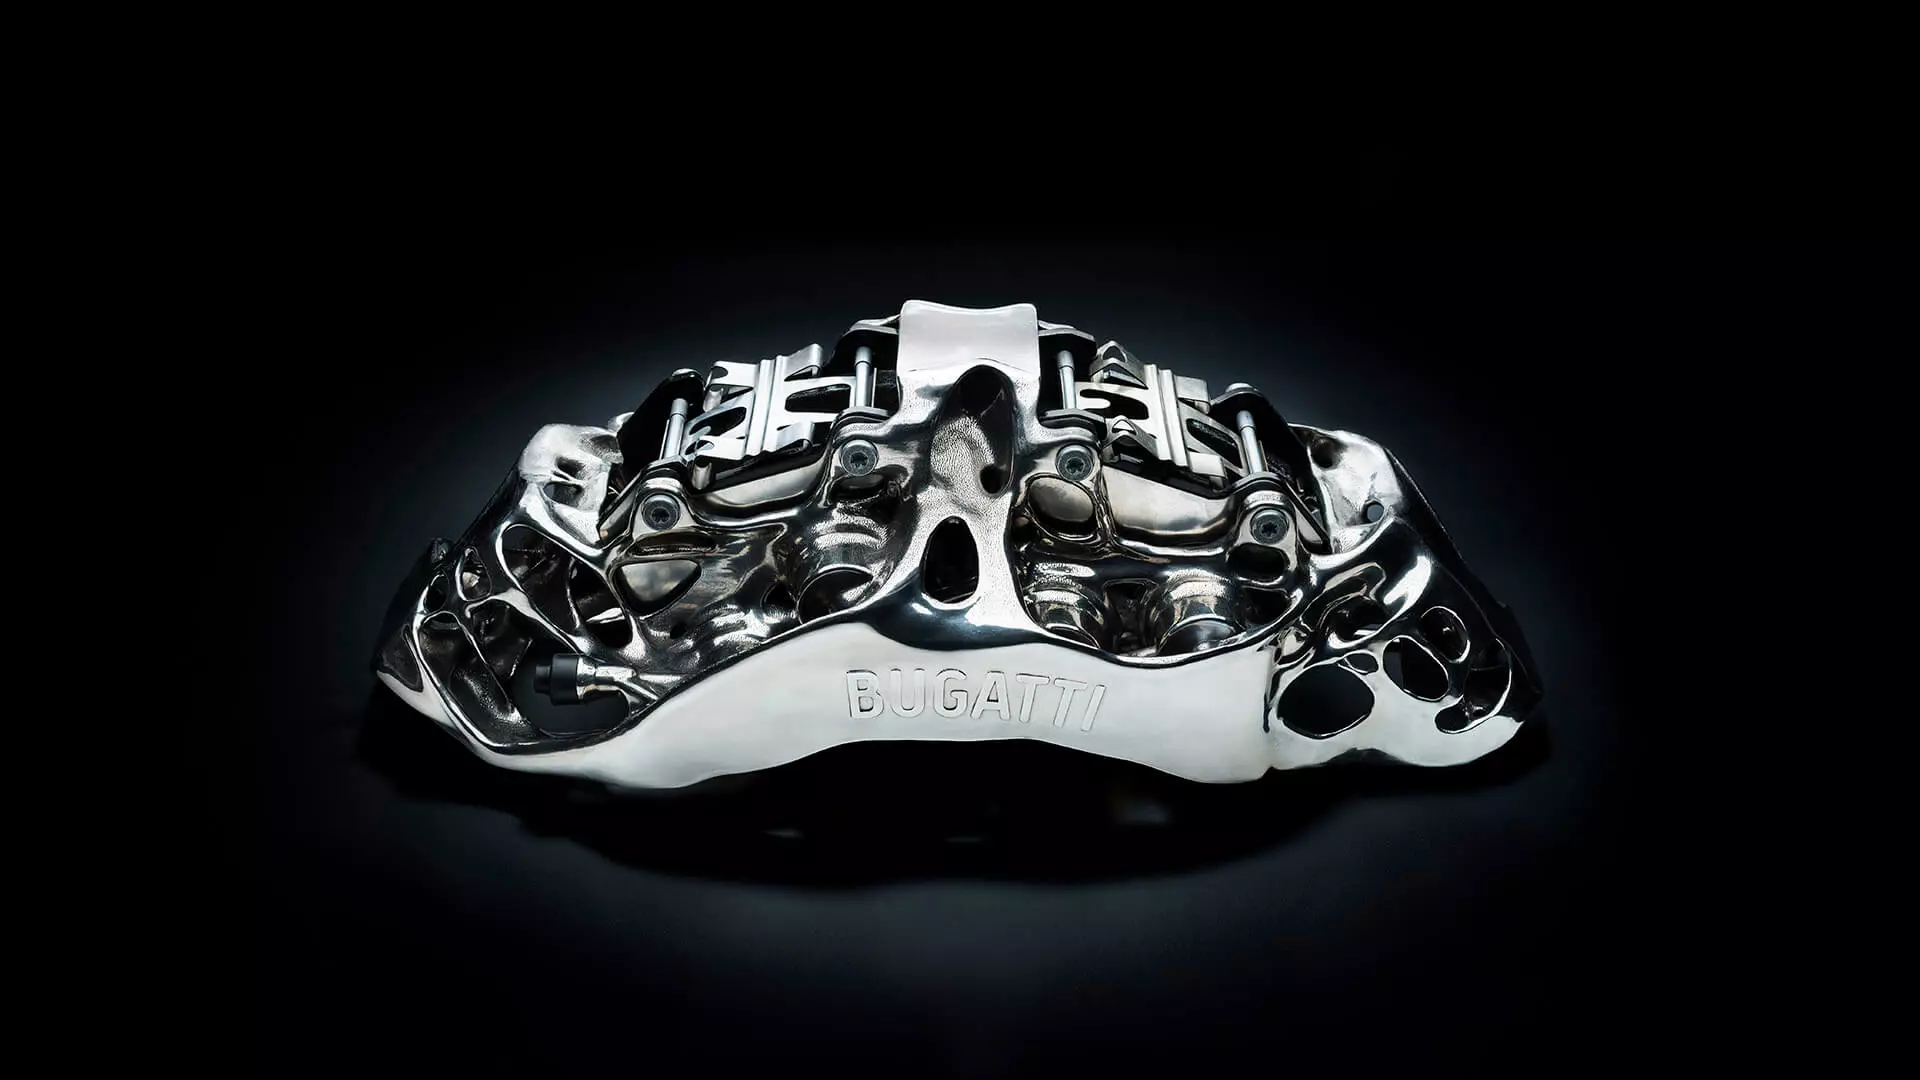 Bugatti Chiron - titanium bireega caliper, daabacaadda 3D